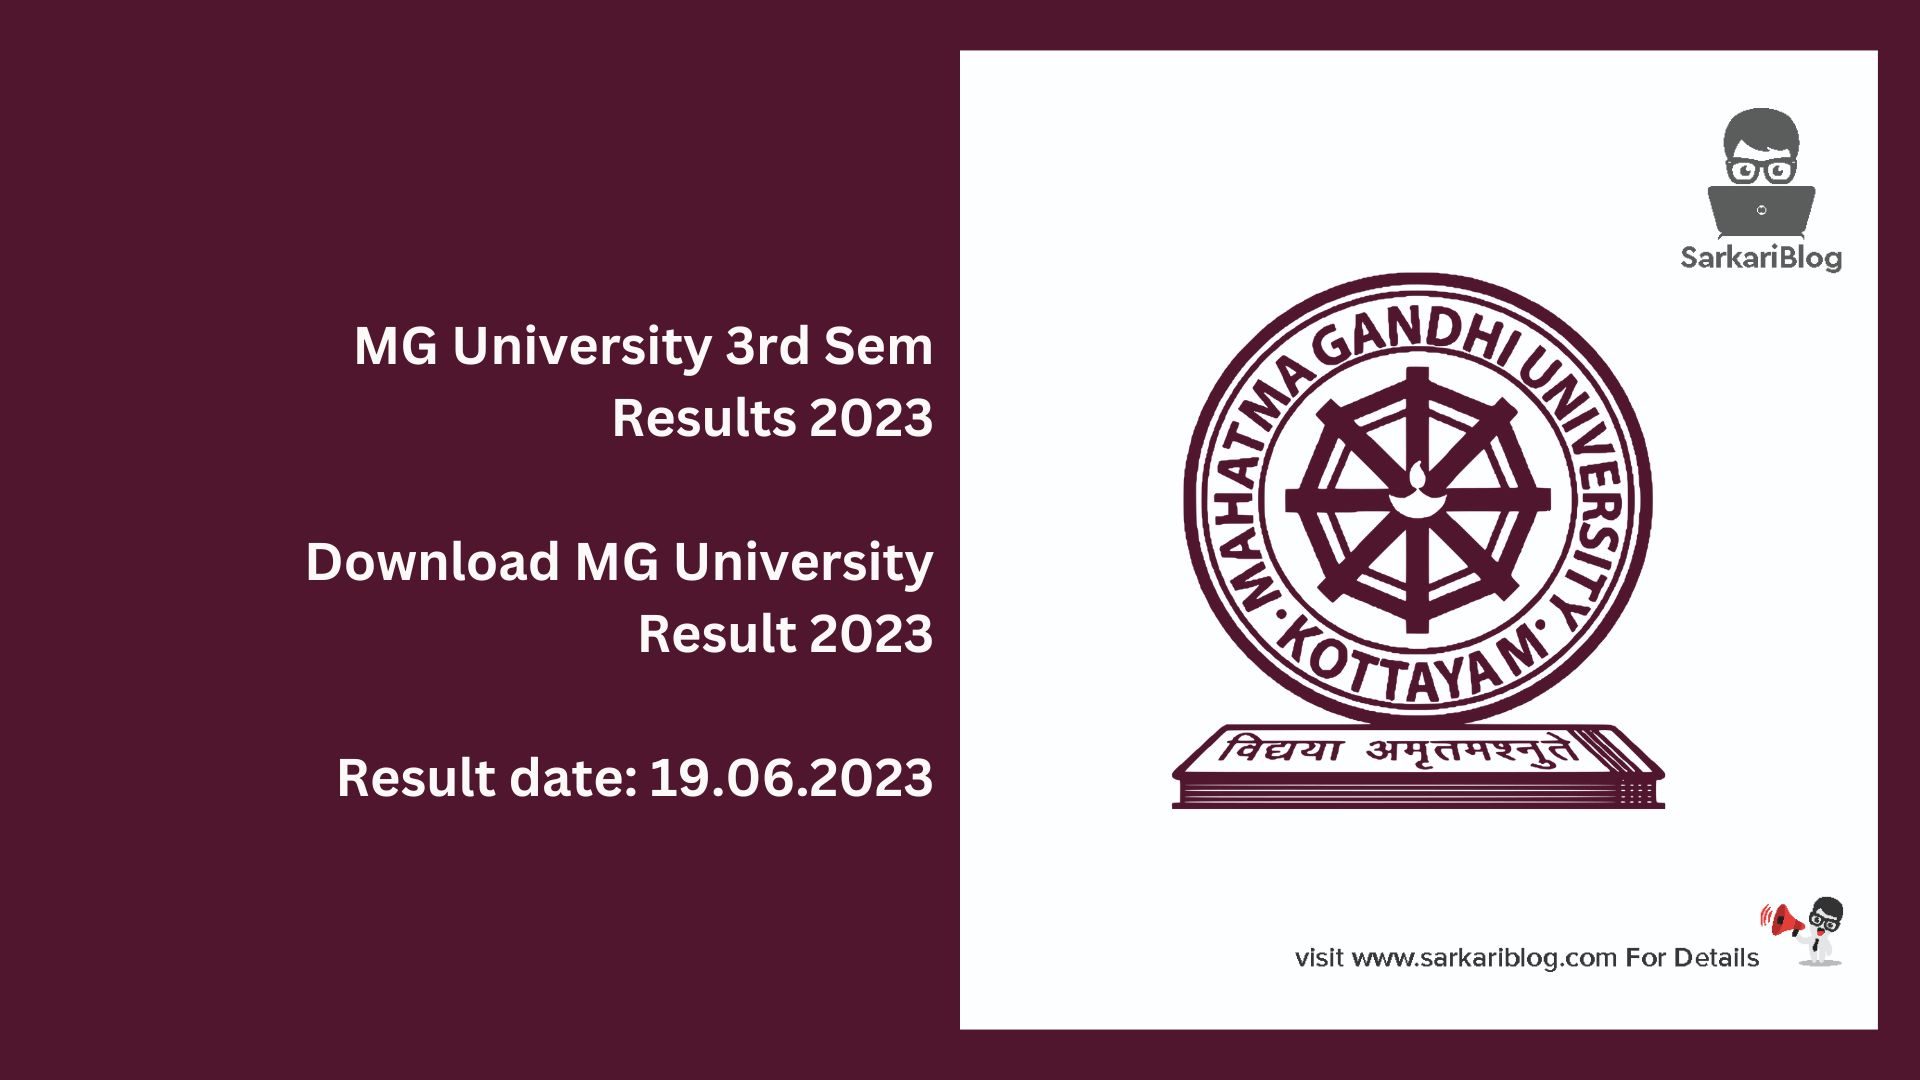 MG University 3rd Sem Results 2023